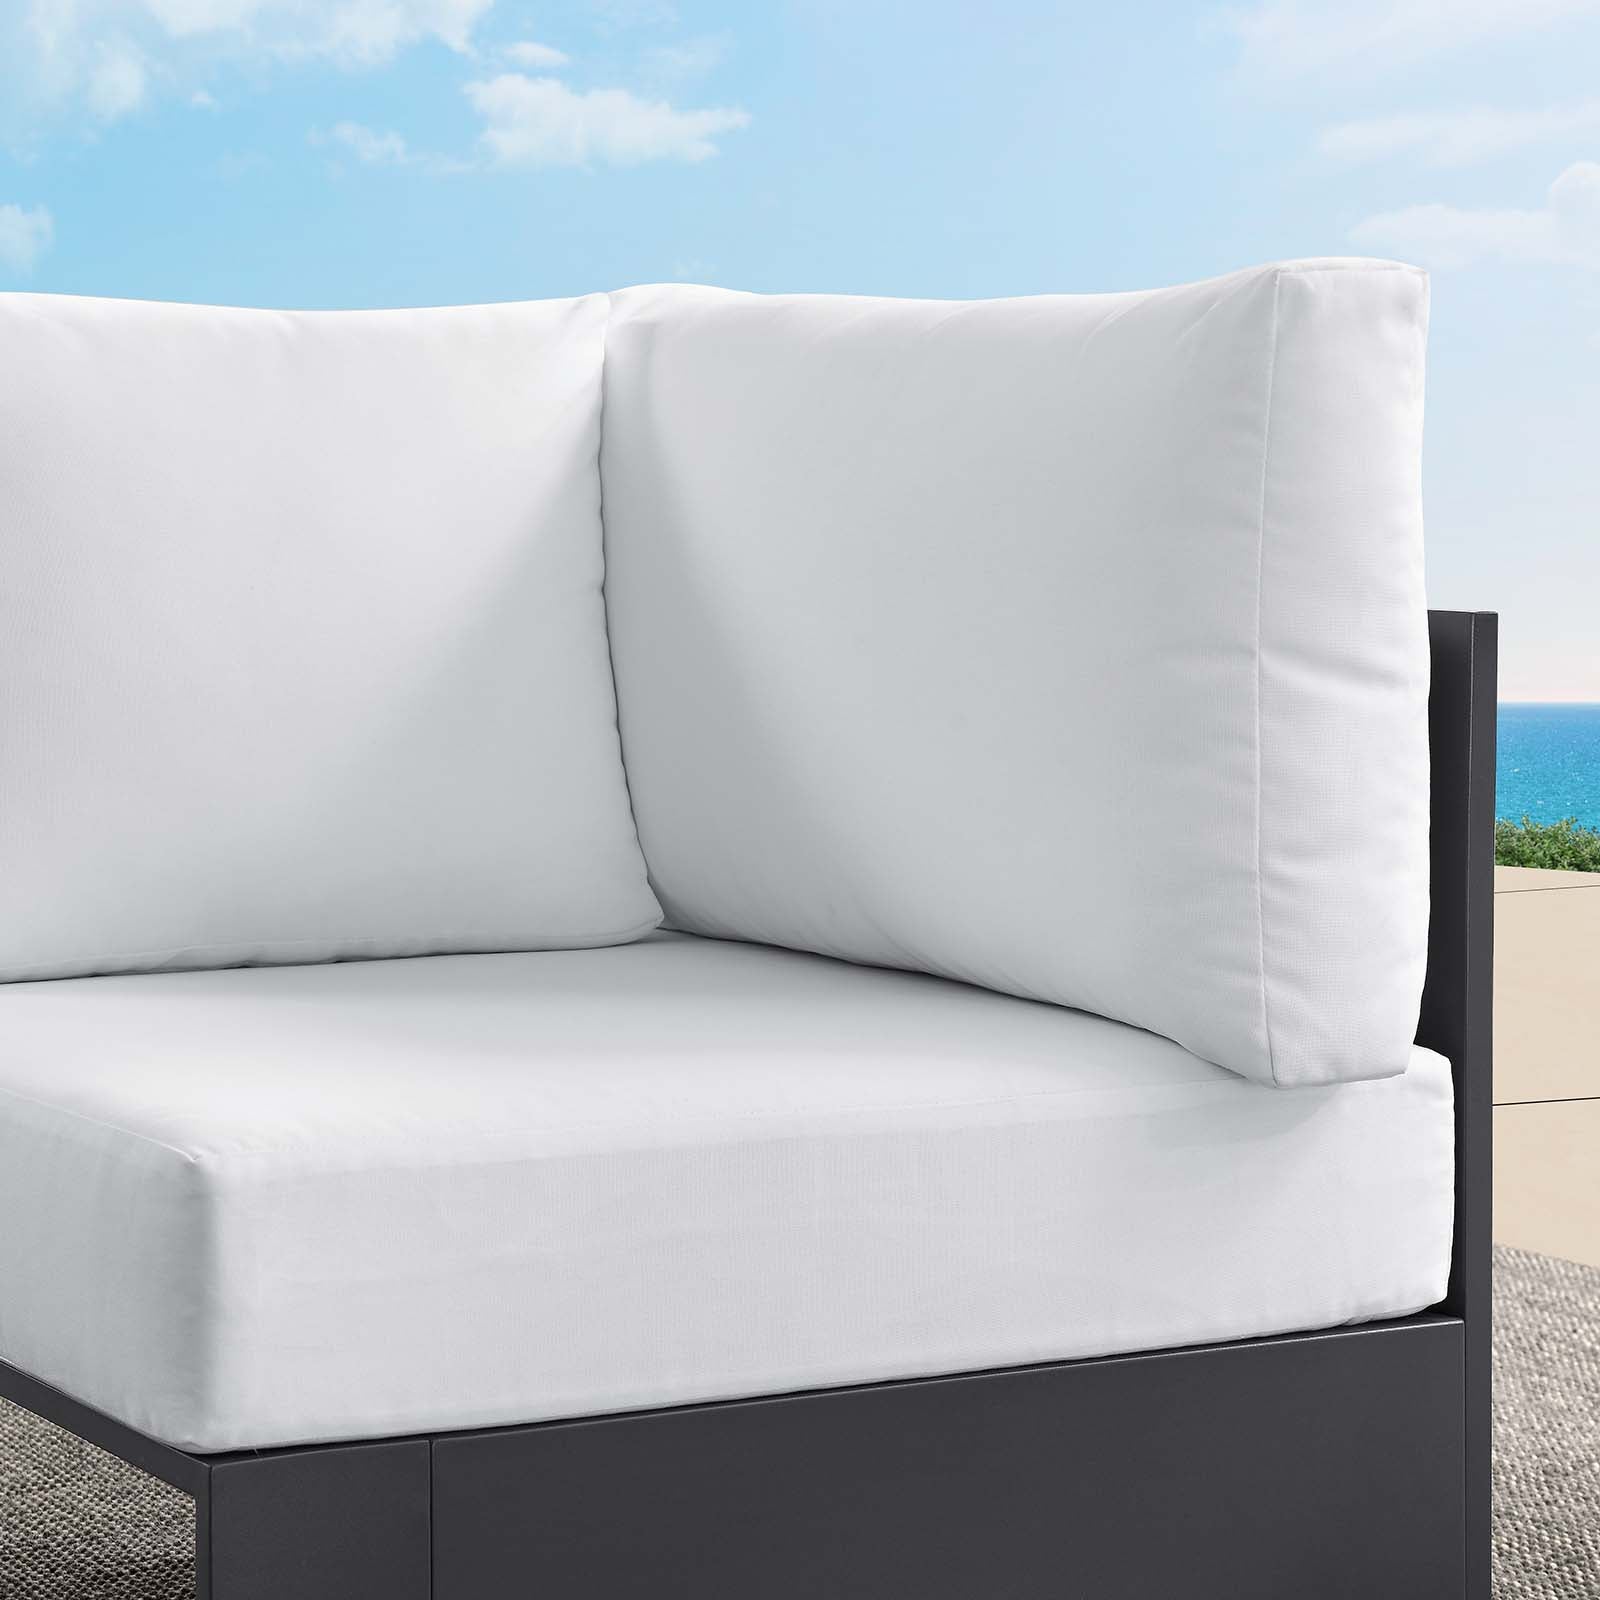 Tahoe Outdoor Patio Powder-Coated Aluminum Modular Corner Chair - East Shore Modern Home Furnishings